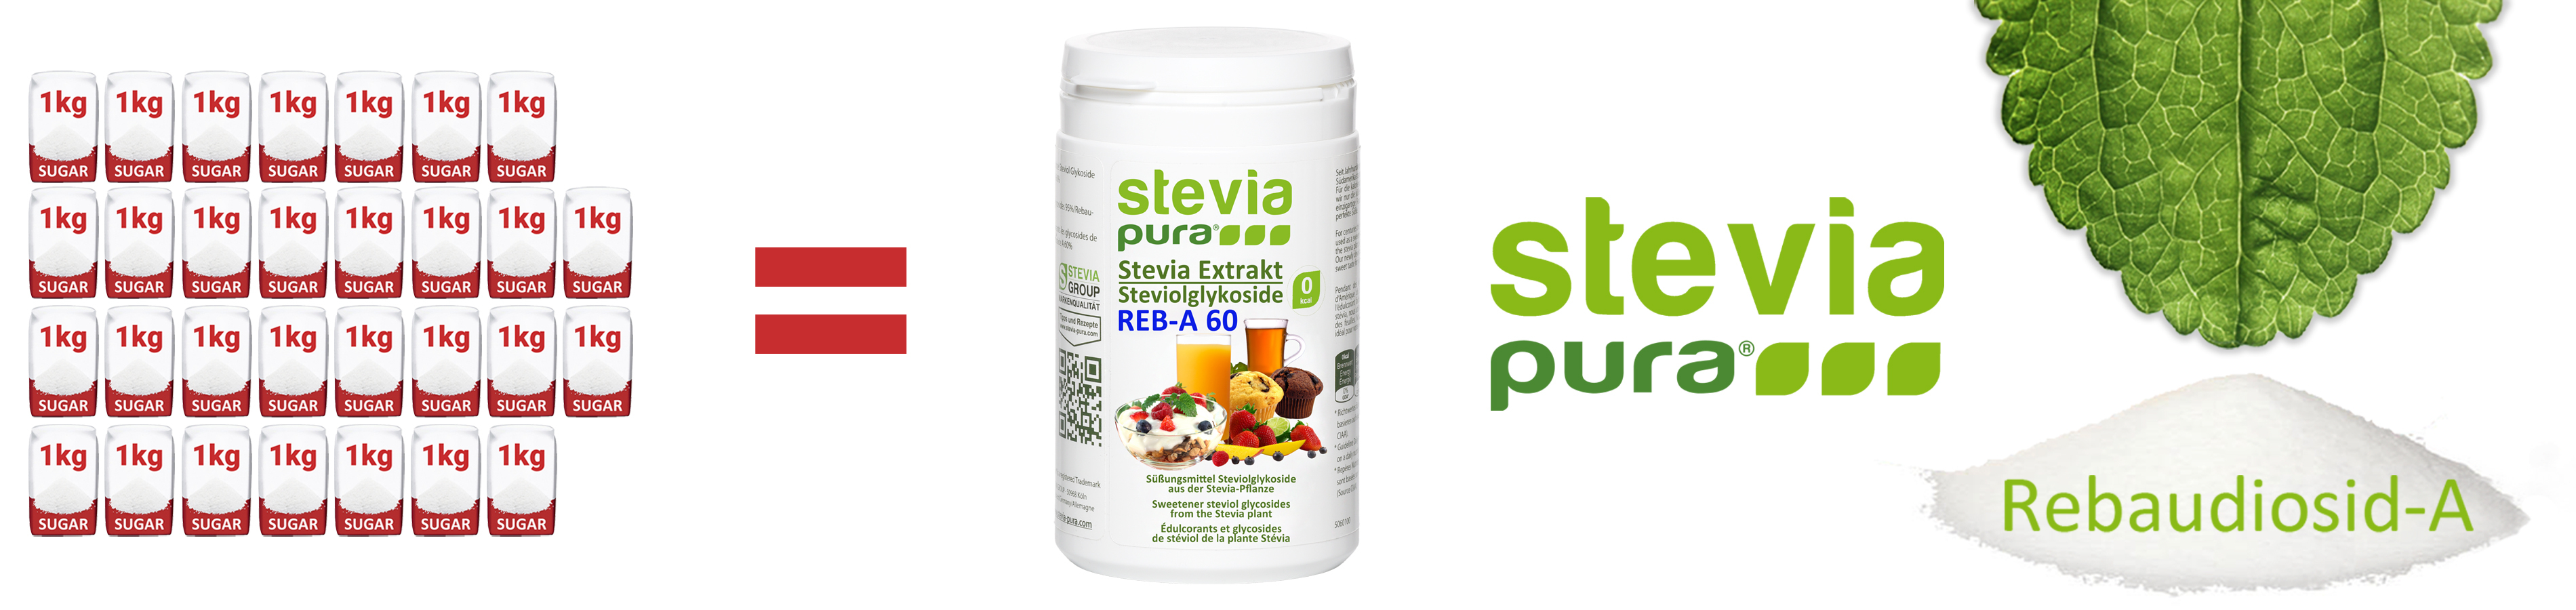 100% Pure Stevia Powder Rebaudioside-A 60% Pure Stevia...